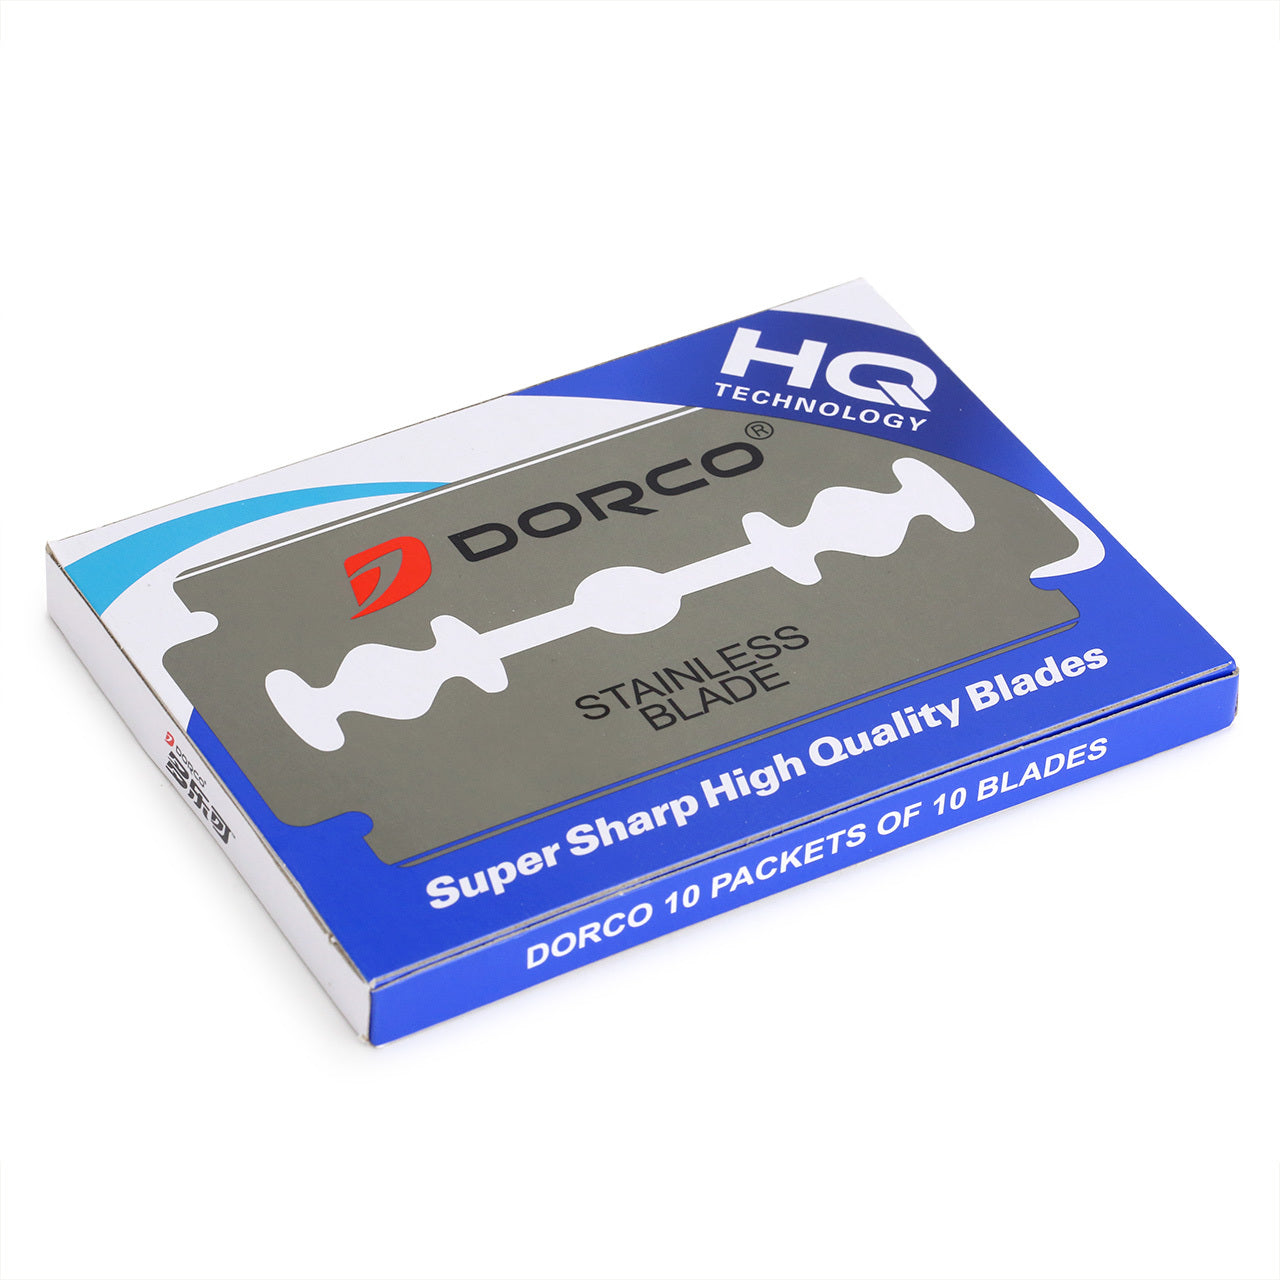 Dorco Razor blades - 100 pack